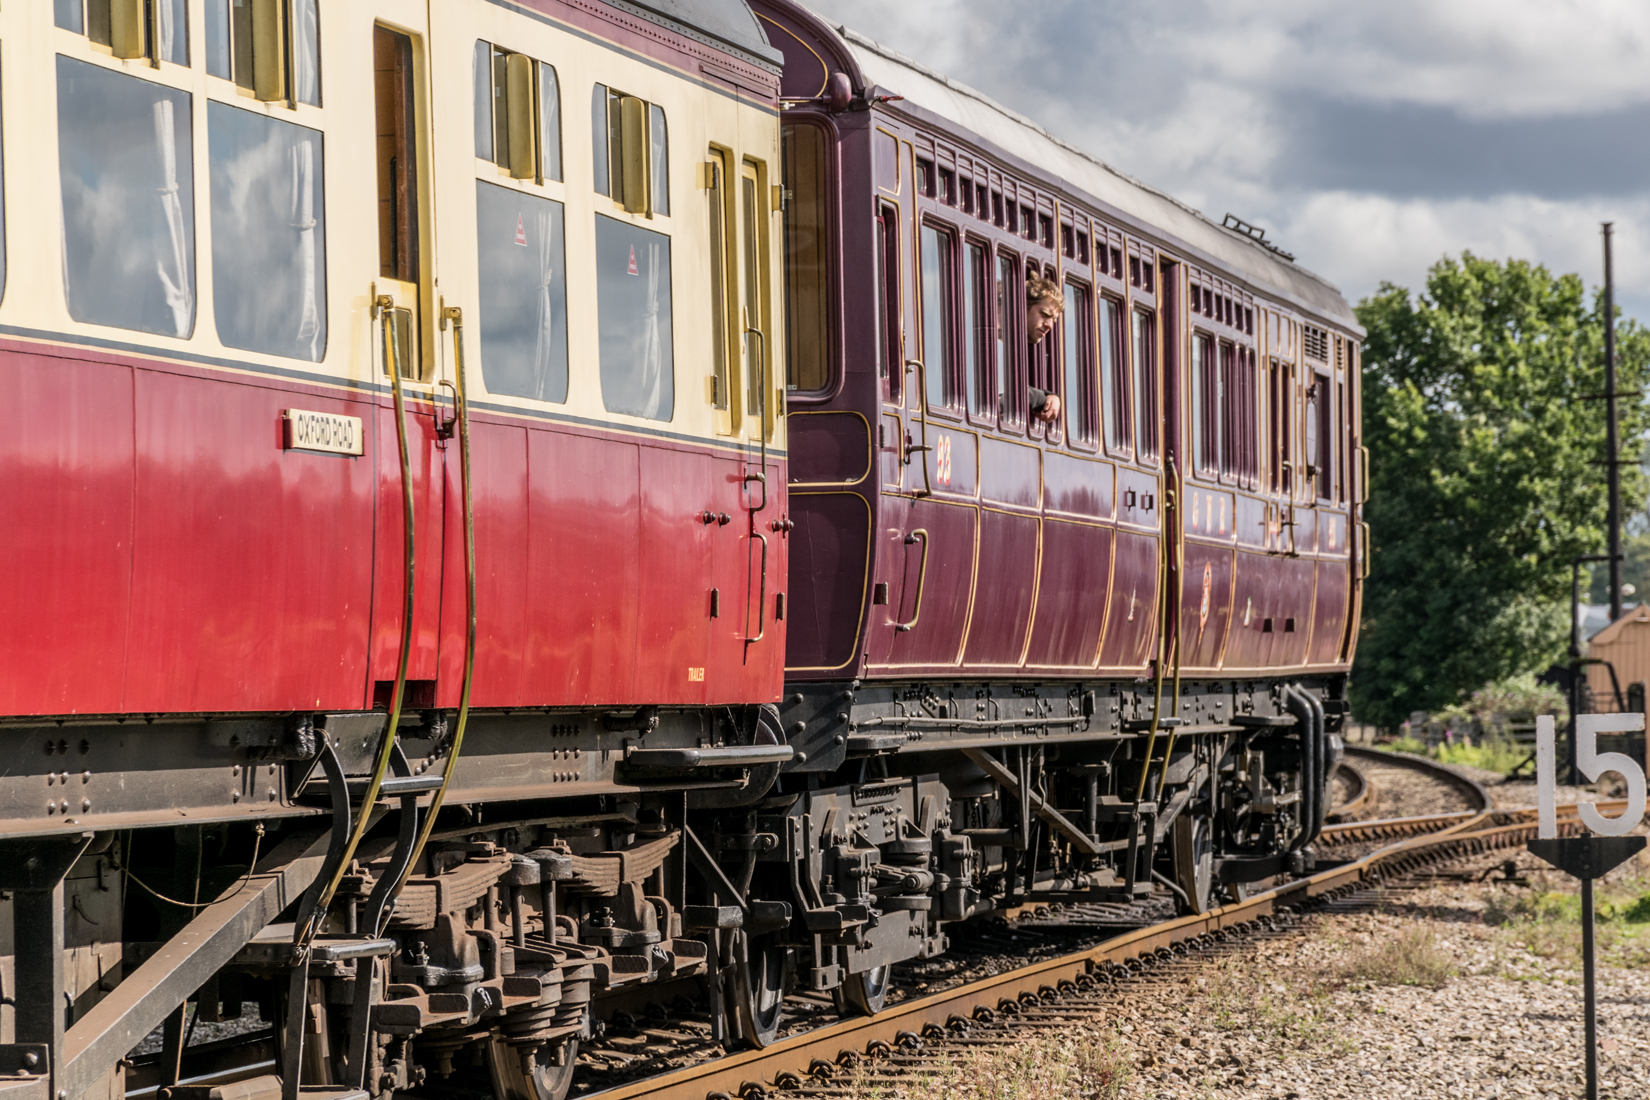 Steam Railmotor No. 93 runing in a three coach train format with 213 a Hawksworth Auto Trailer and 92 a Churchward Auto Trailer